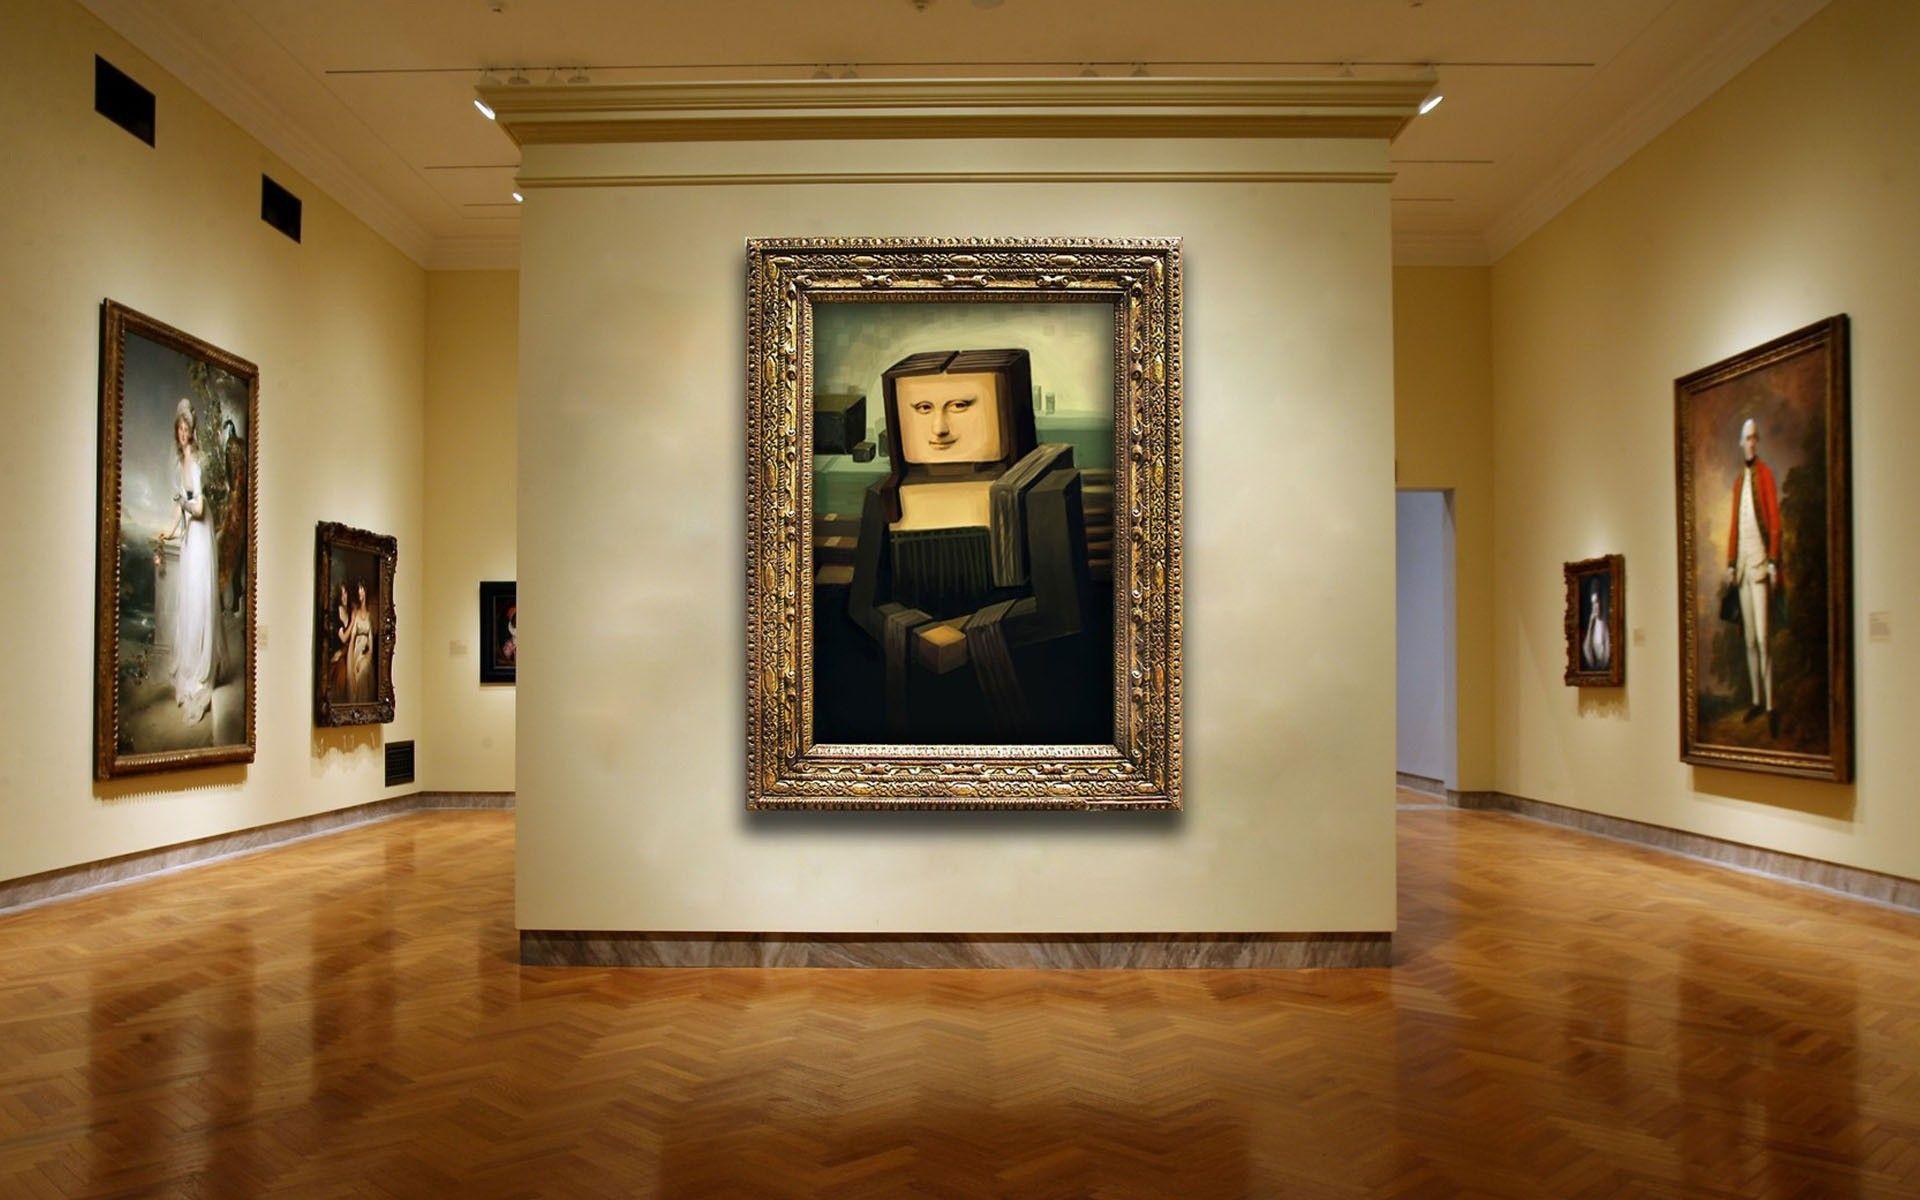 Mona Lisa HD Wallpaper and Background Image